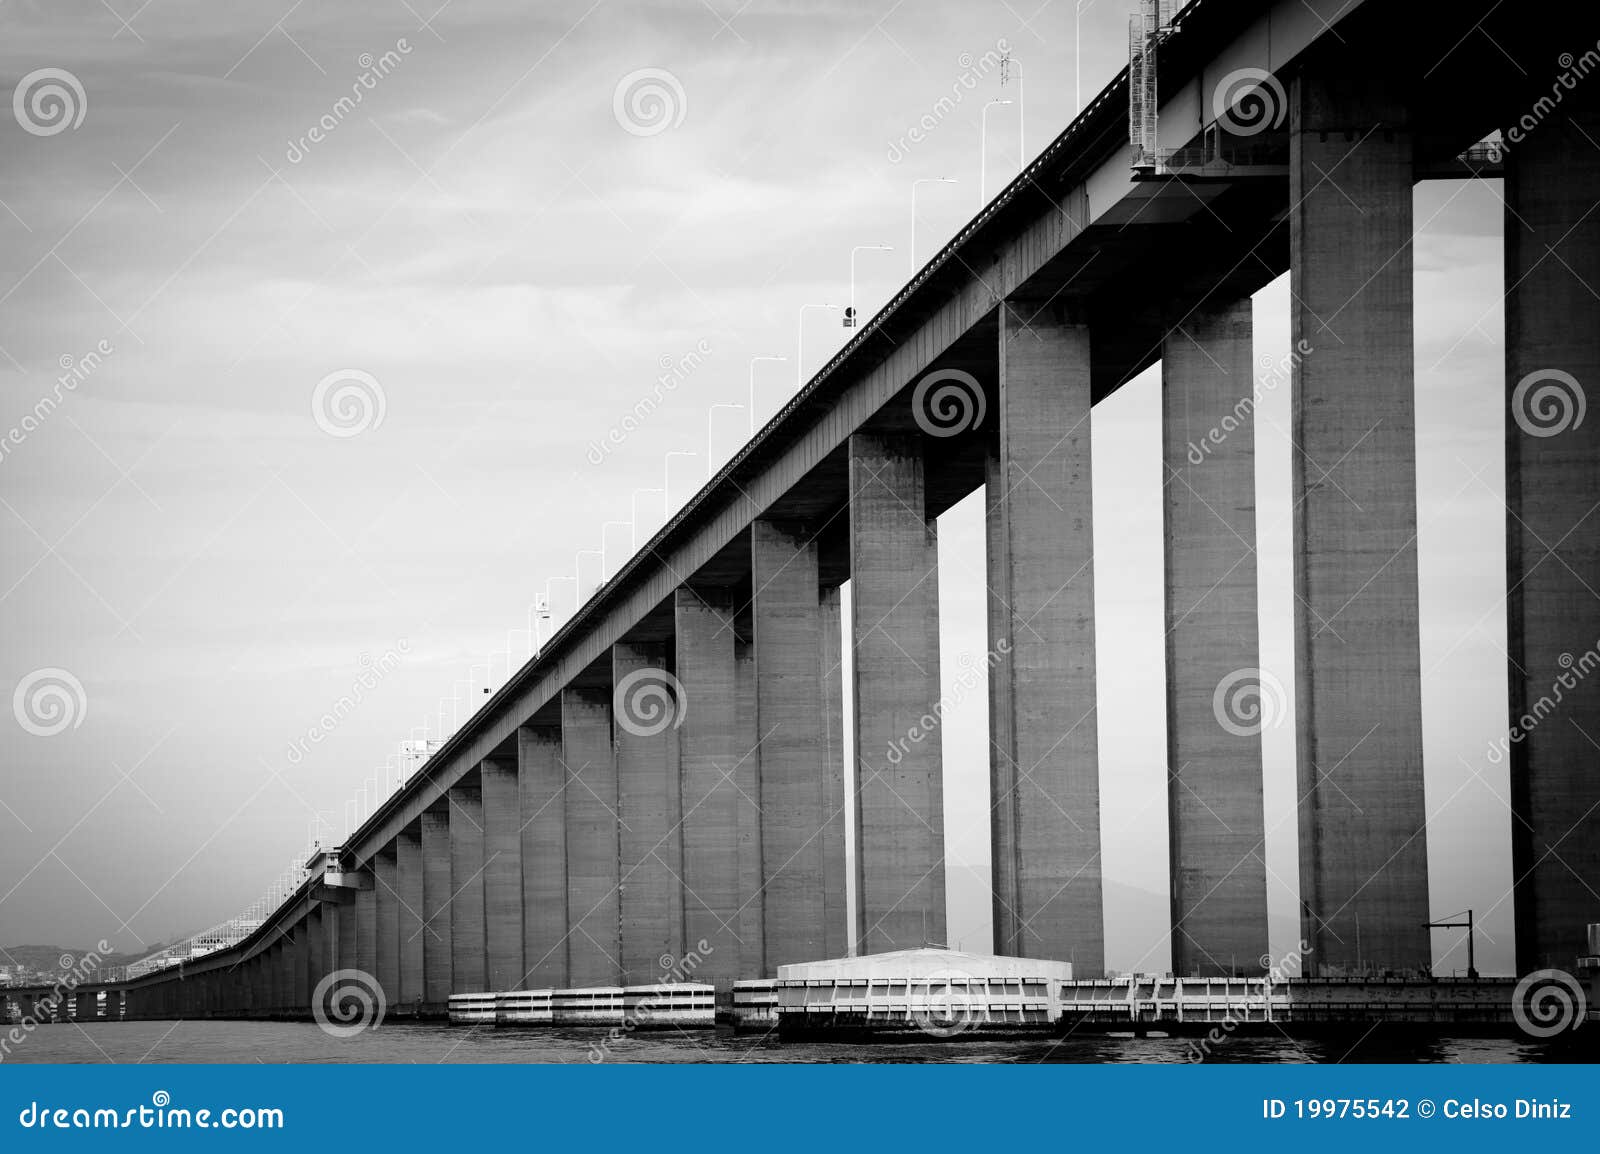 rio-niteroi bridge